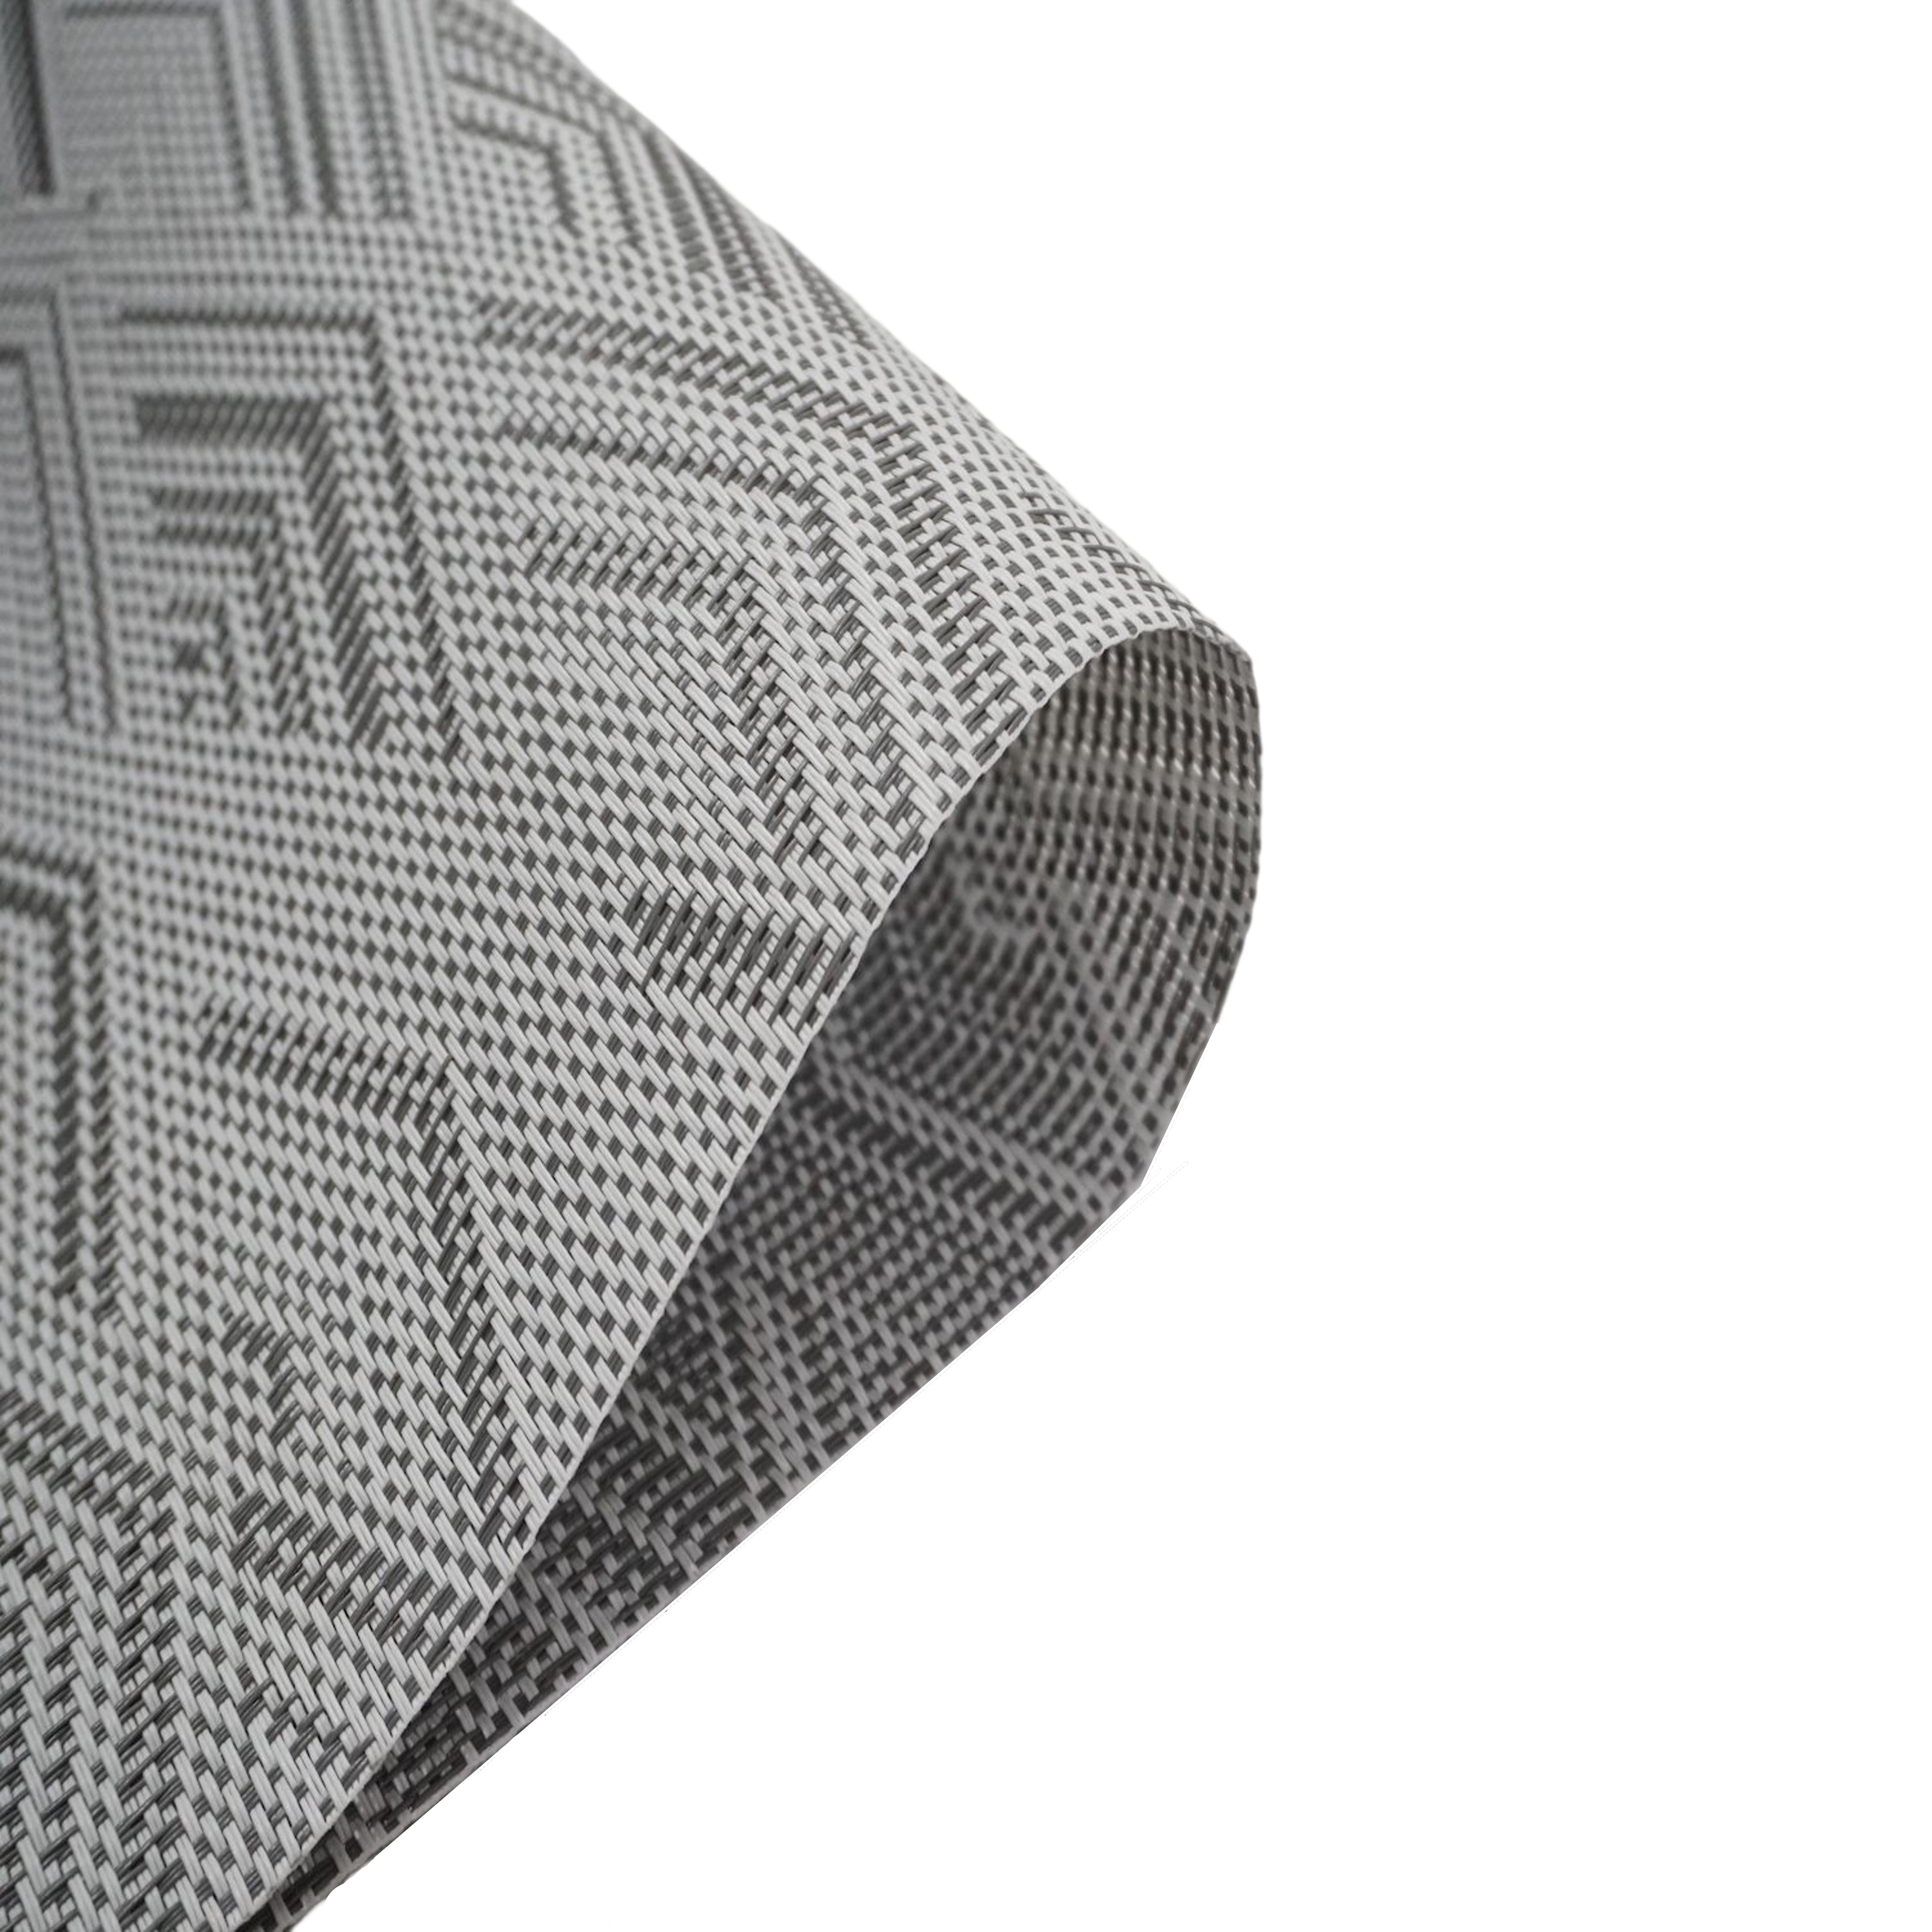 Dainty Home Diamond Woven Textilene Crossweave With Diamond Woven Design Reversible 13" x 19" Rectangular Placemats